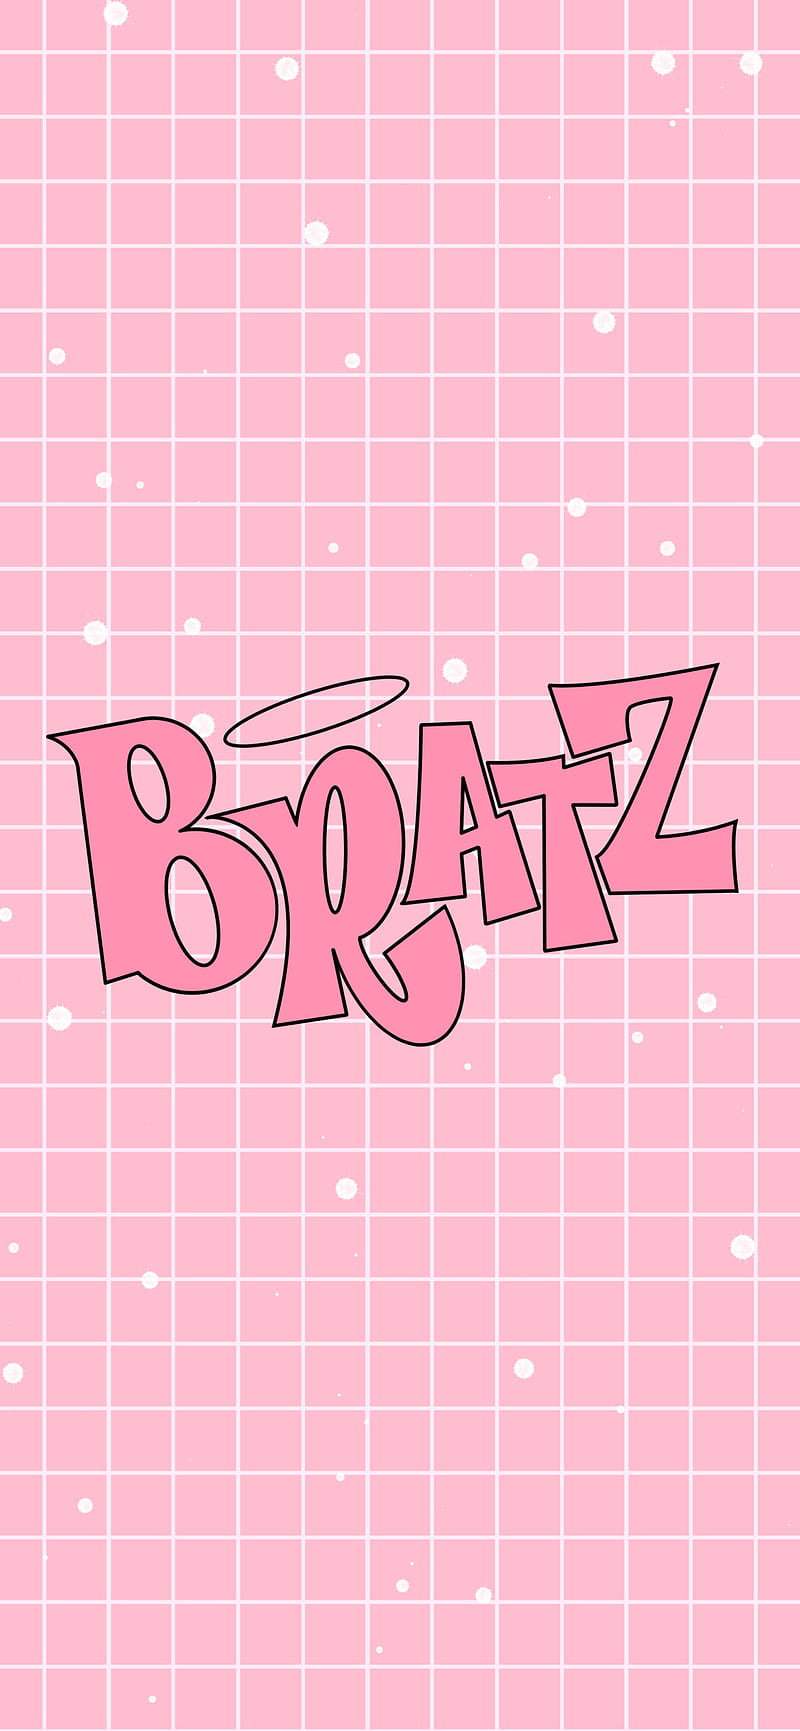 Download Pink Glitter Aesthetic Bratz Doll Wallpaper